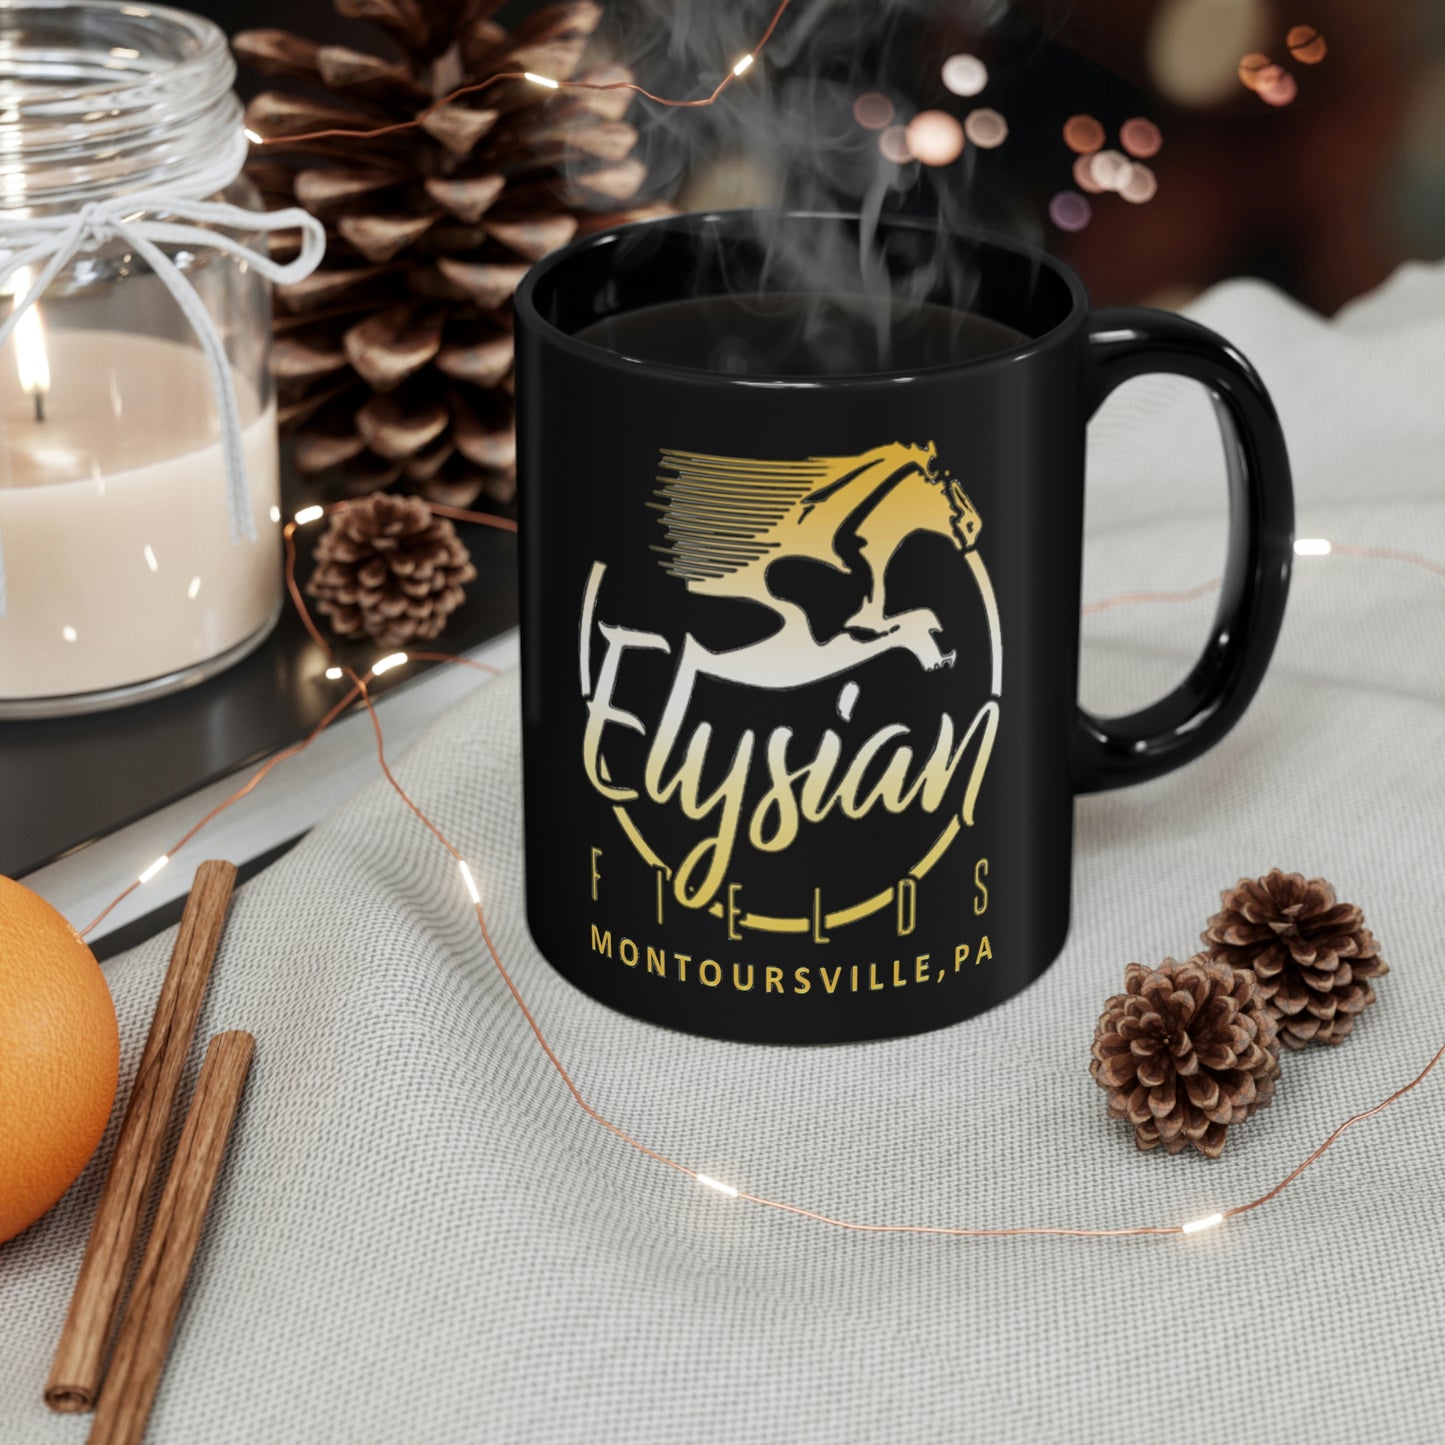 Elysian Fields - Black mug 11oz - Color Logo